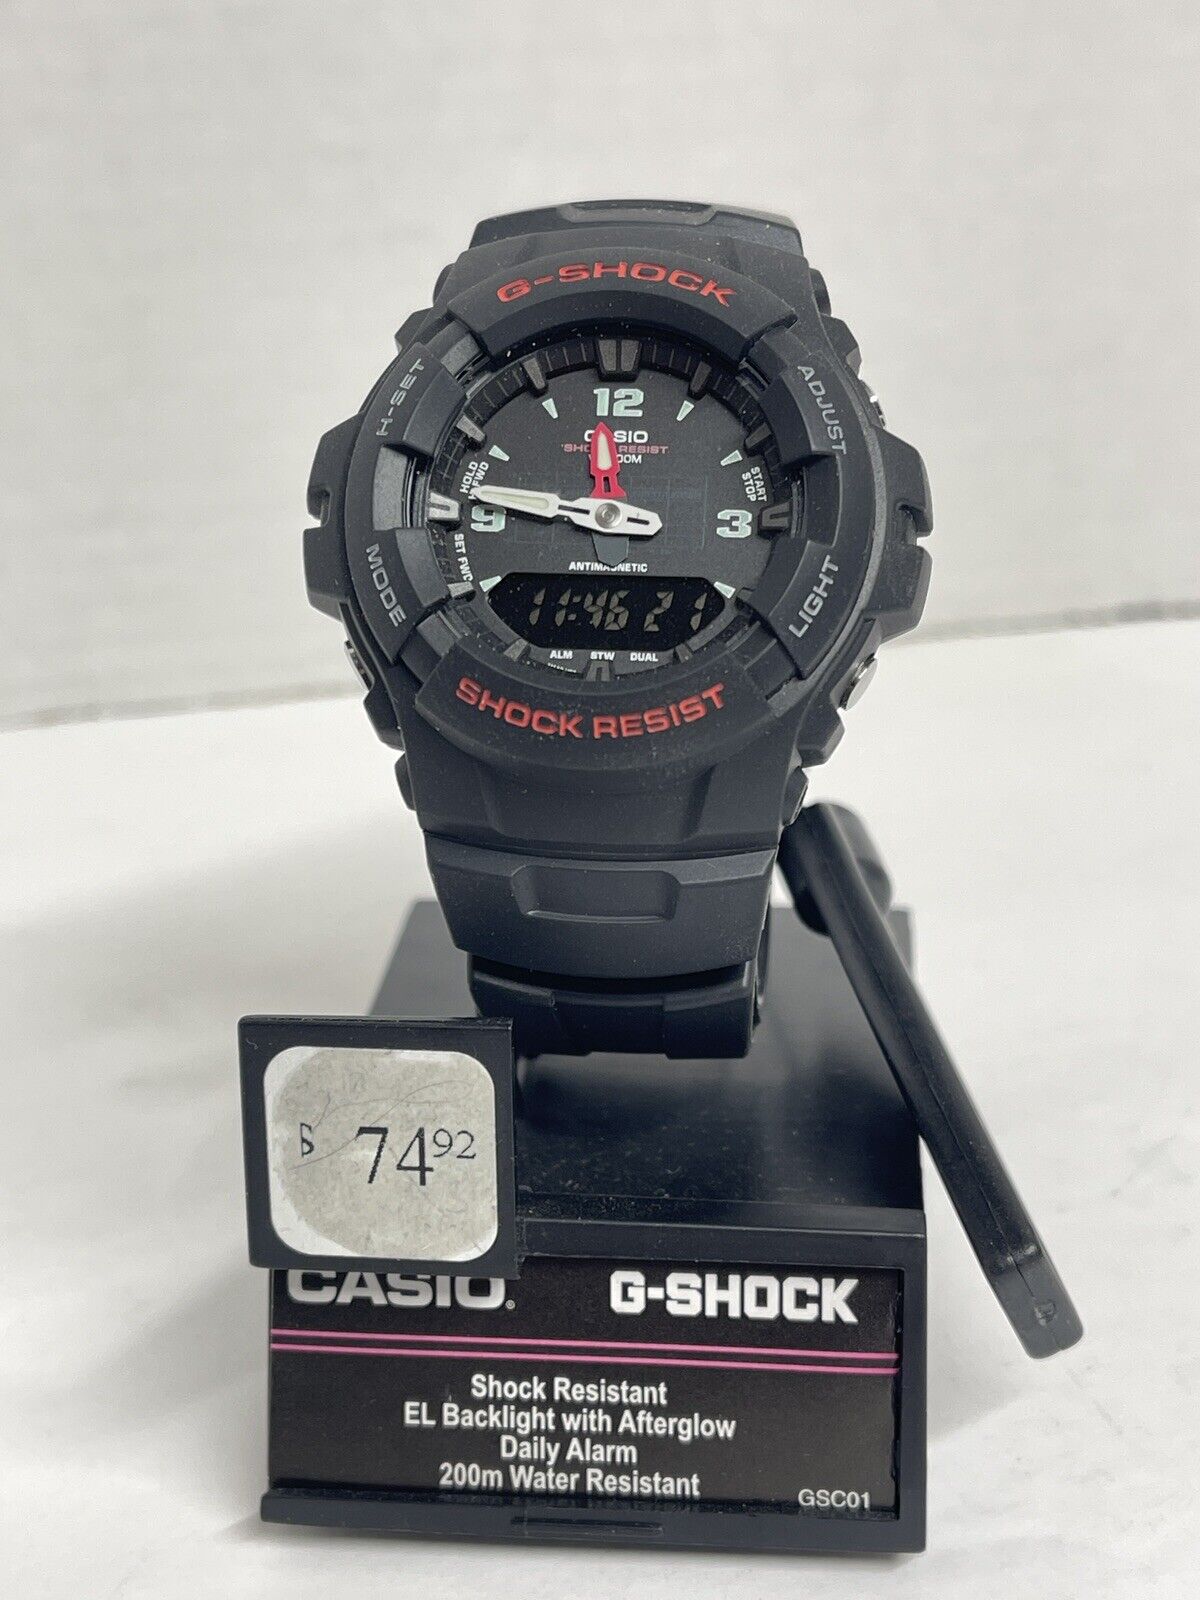 Casio G100-1BV, G-Shock Analog/Digital Watch, Black Resin Band, Alarm NEW 74.92 |